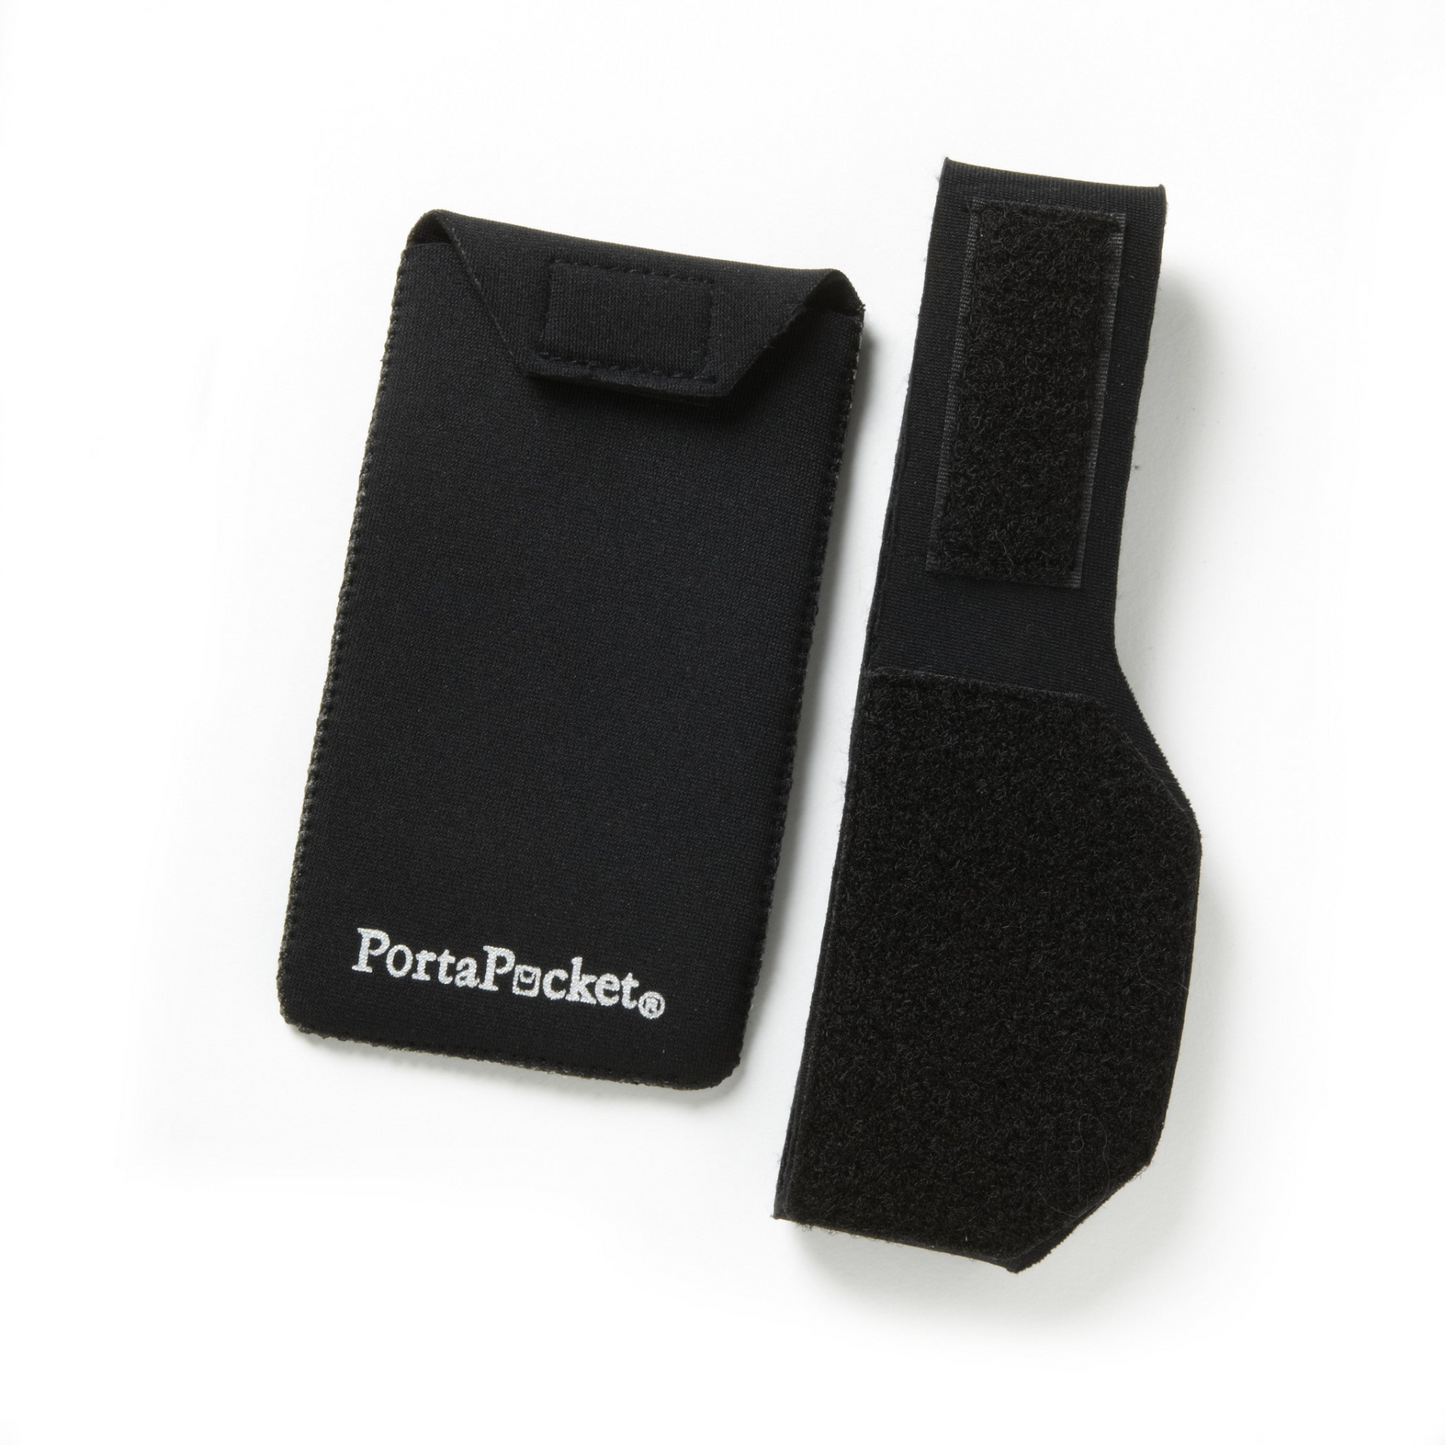 PortaPocket Combo Kit ~ best seller ~ smartphone arm holster / cell phone leg band, Goodies N Stuff